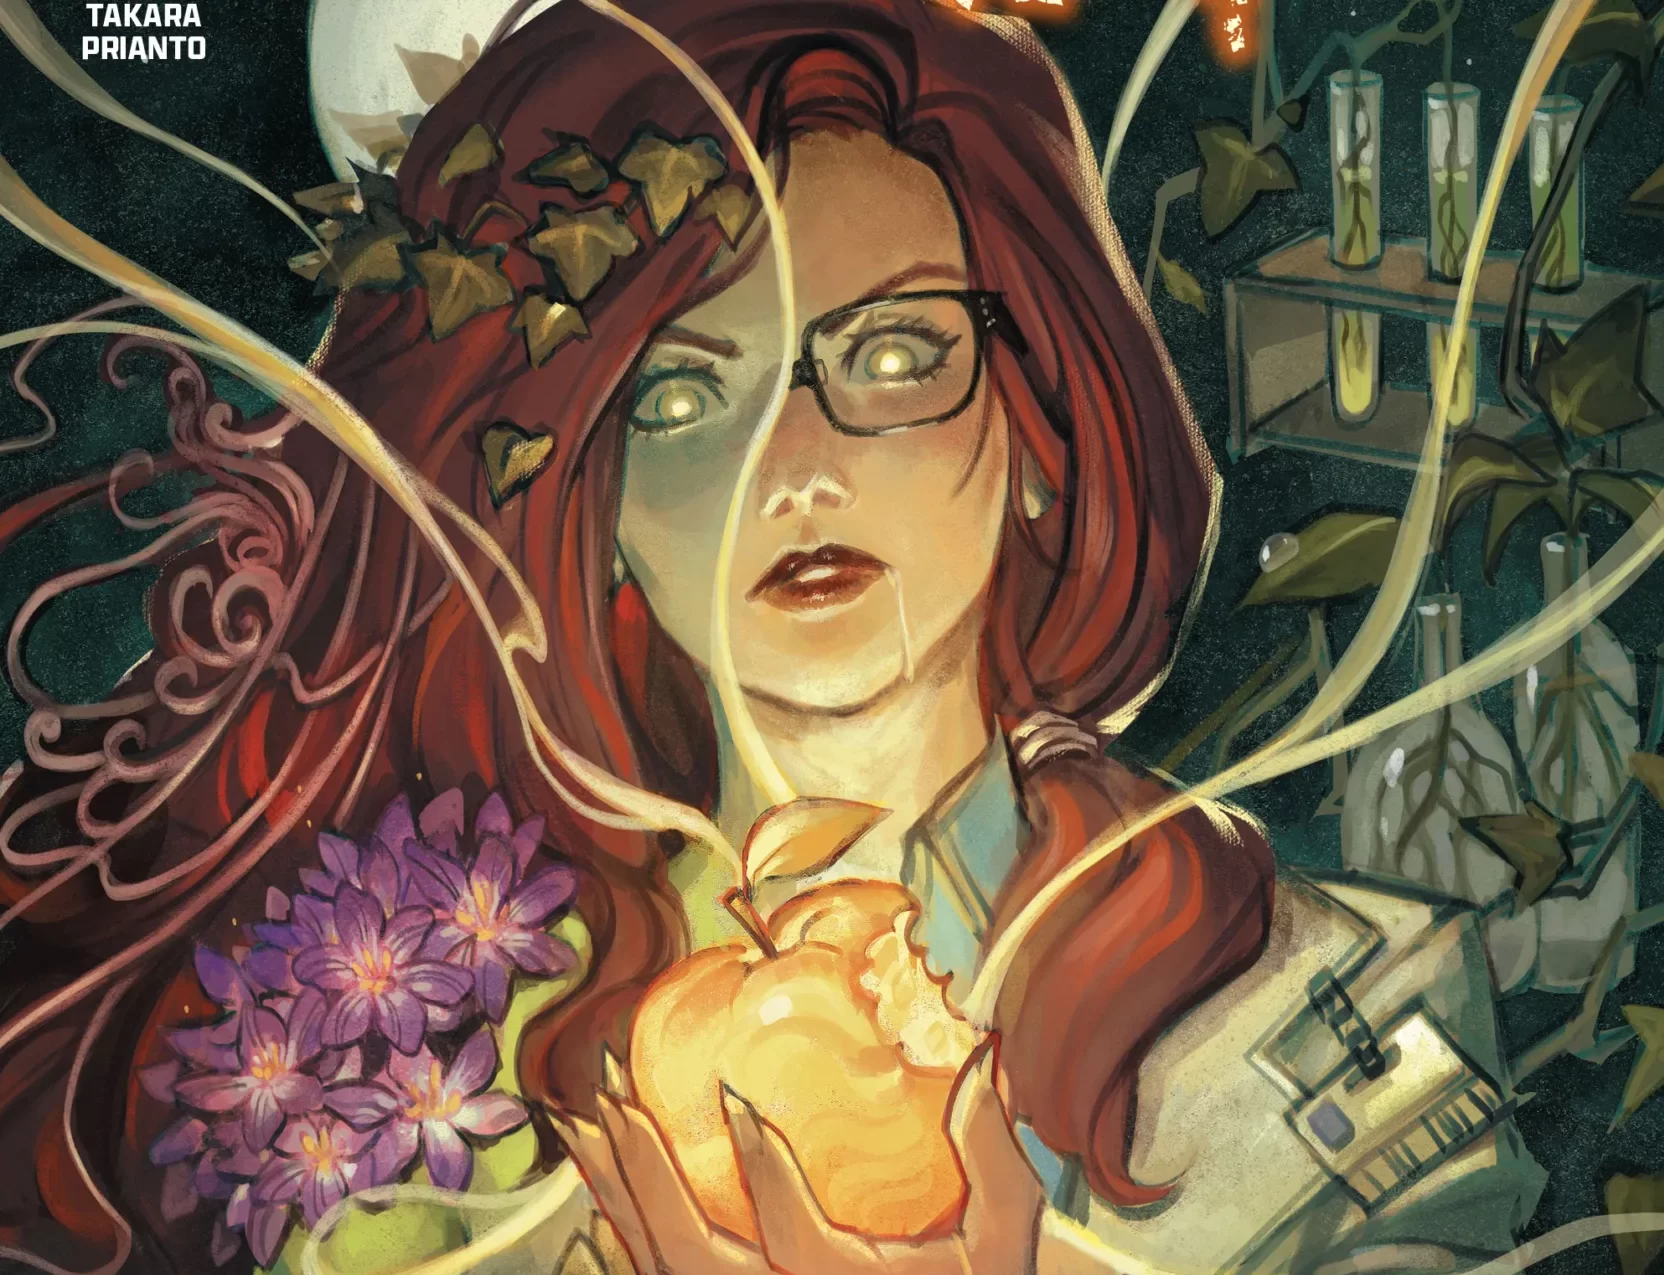 'Poison Ivy' #19 starts a haunting account of Pamela Isley's tragic origins